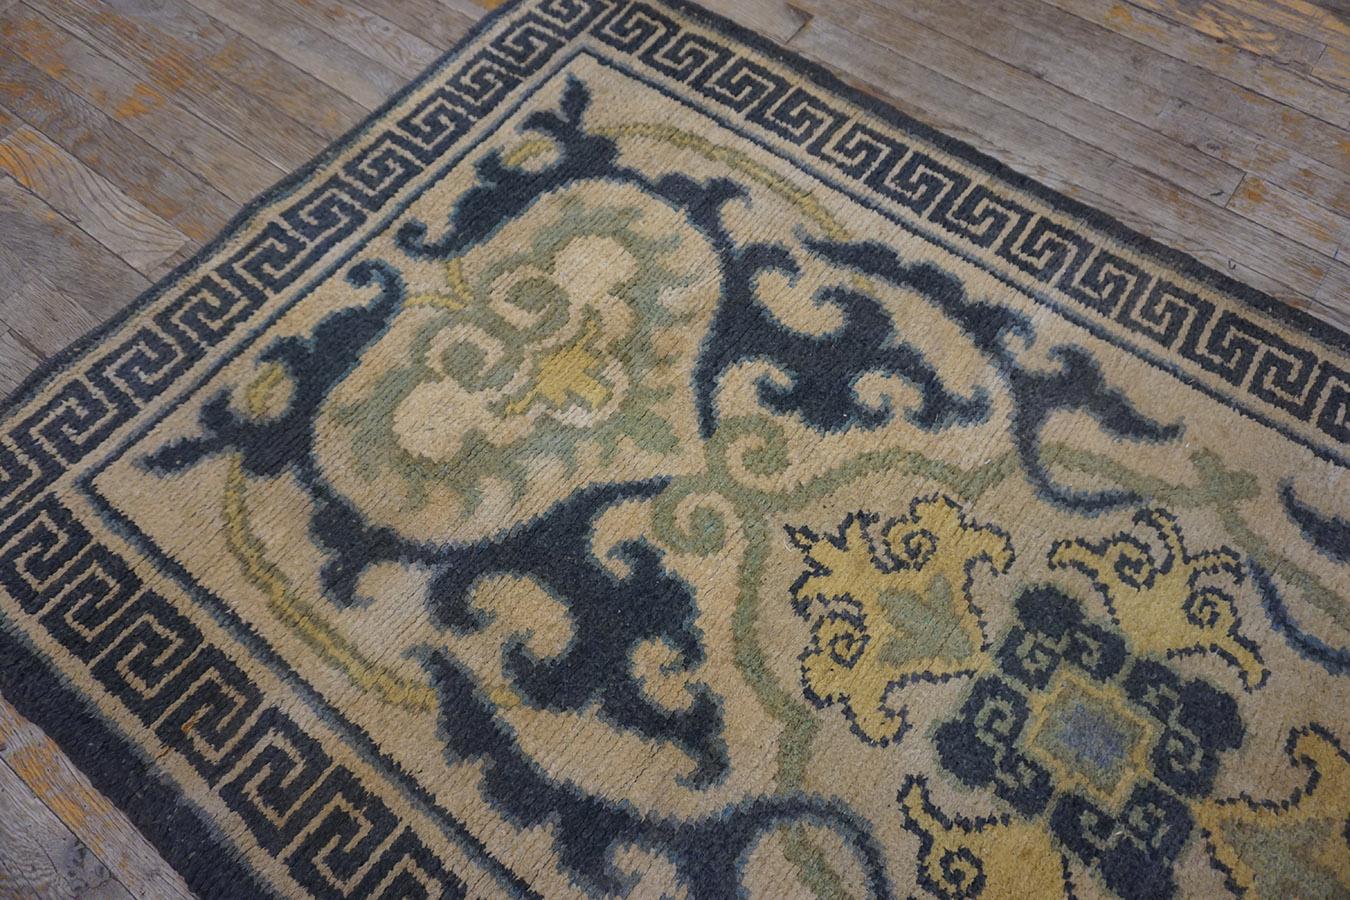 Early 20th Century Japanese Cotton Nabeshima Dantsu Carpet (3' x 5'10